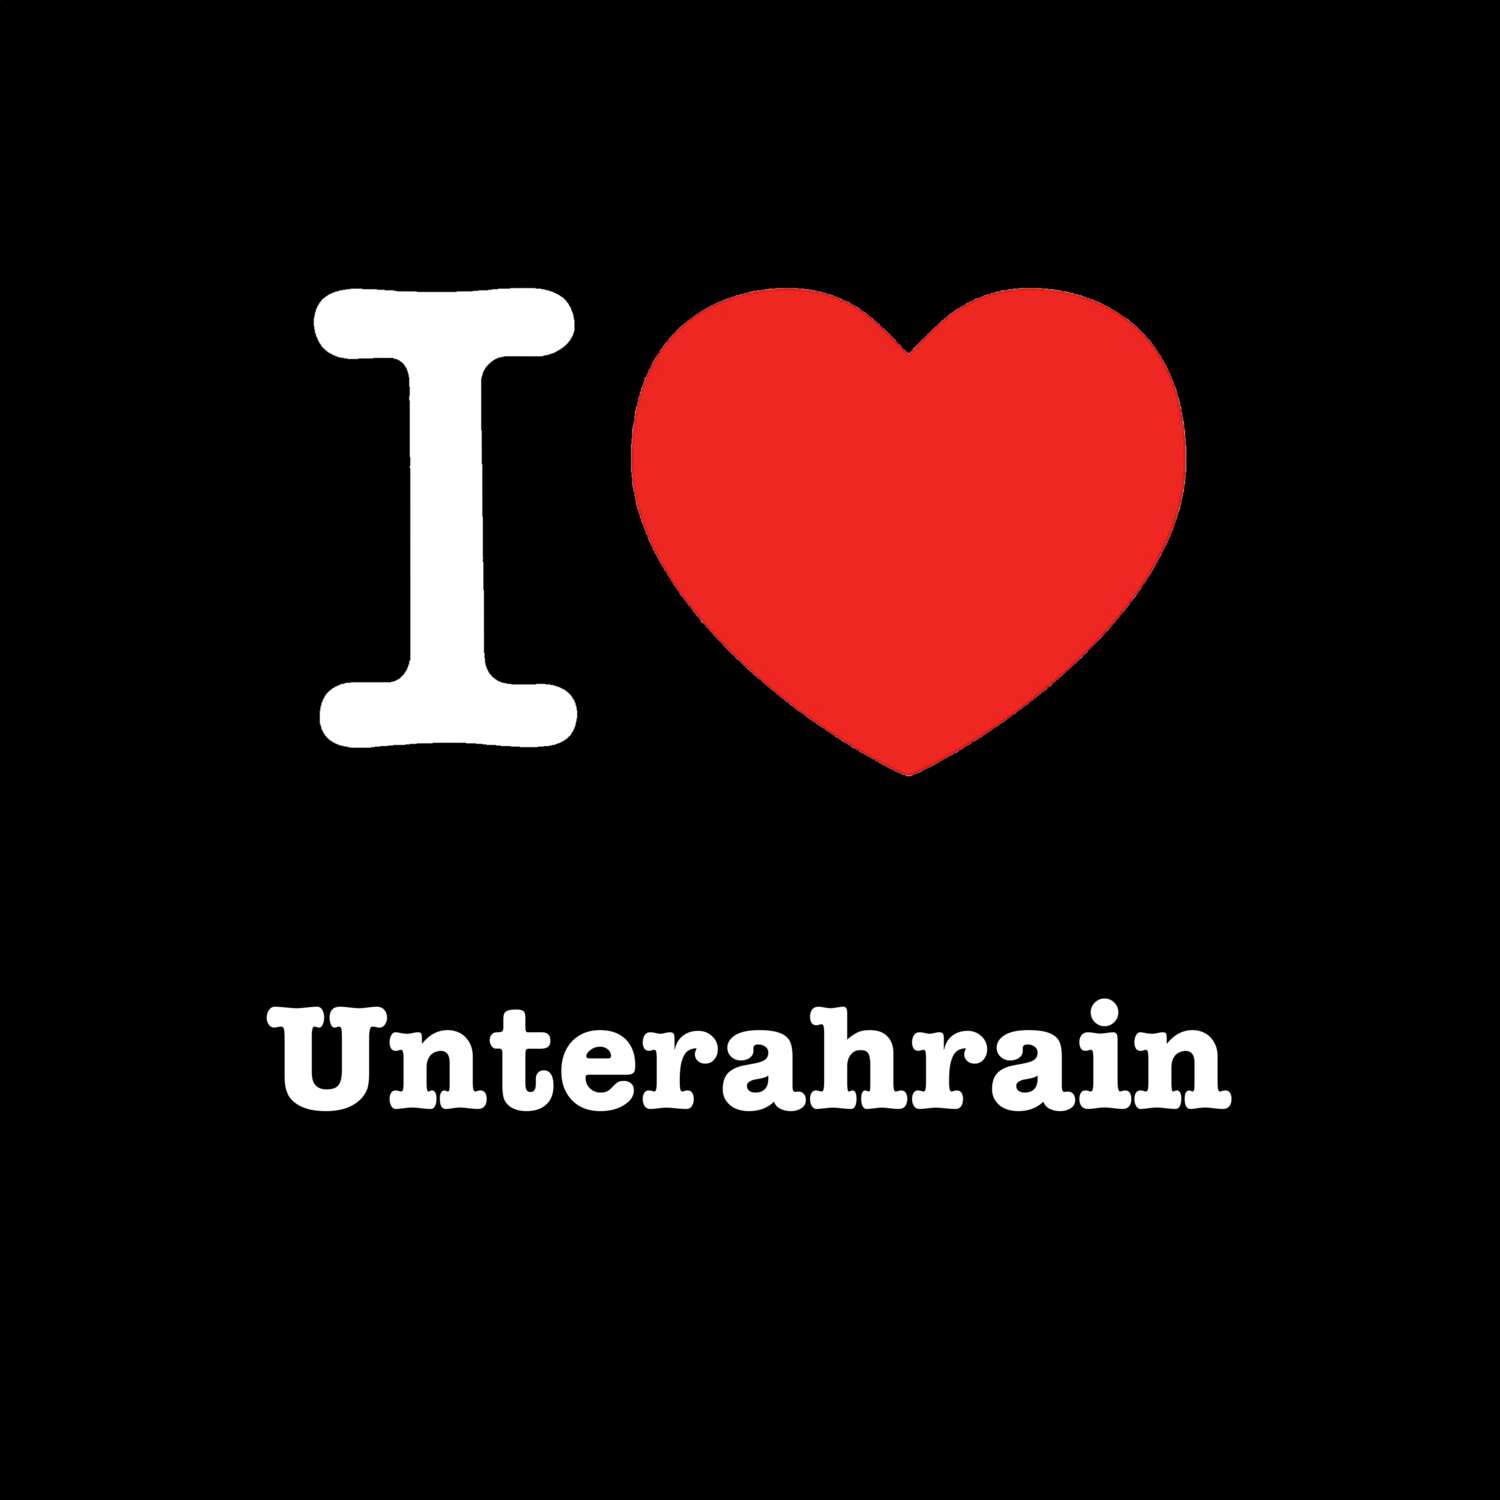 Unterahrain T-Shirt »I love«